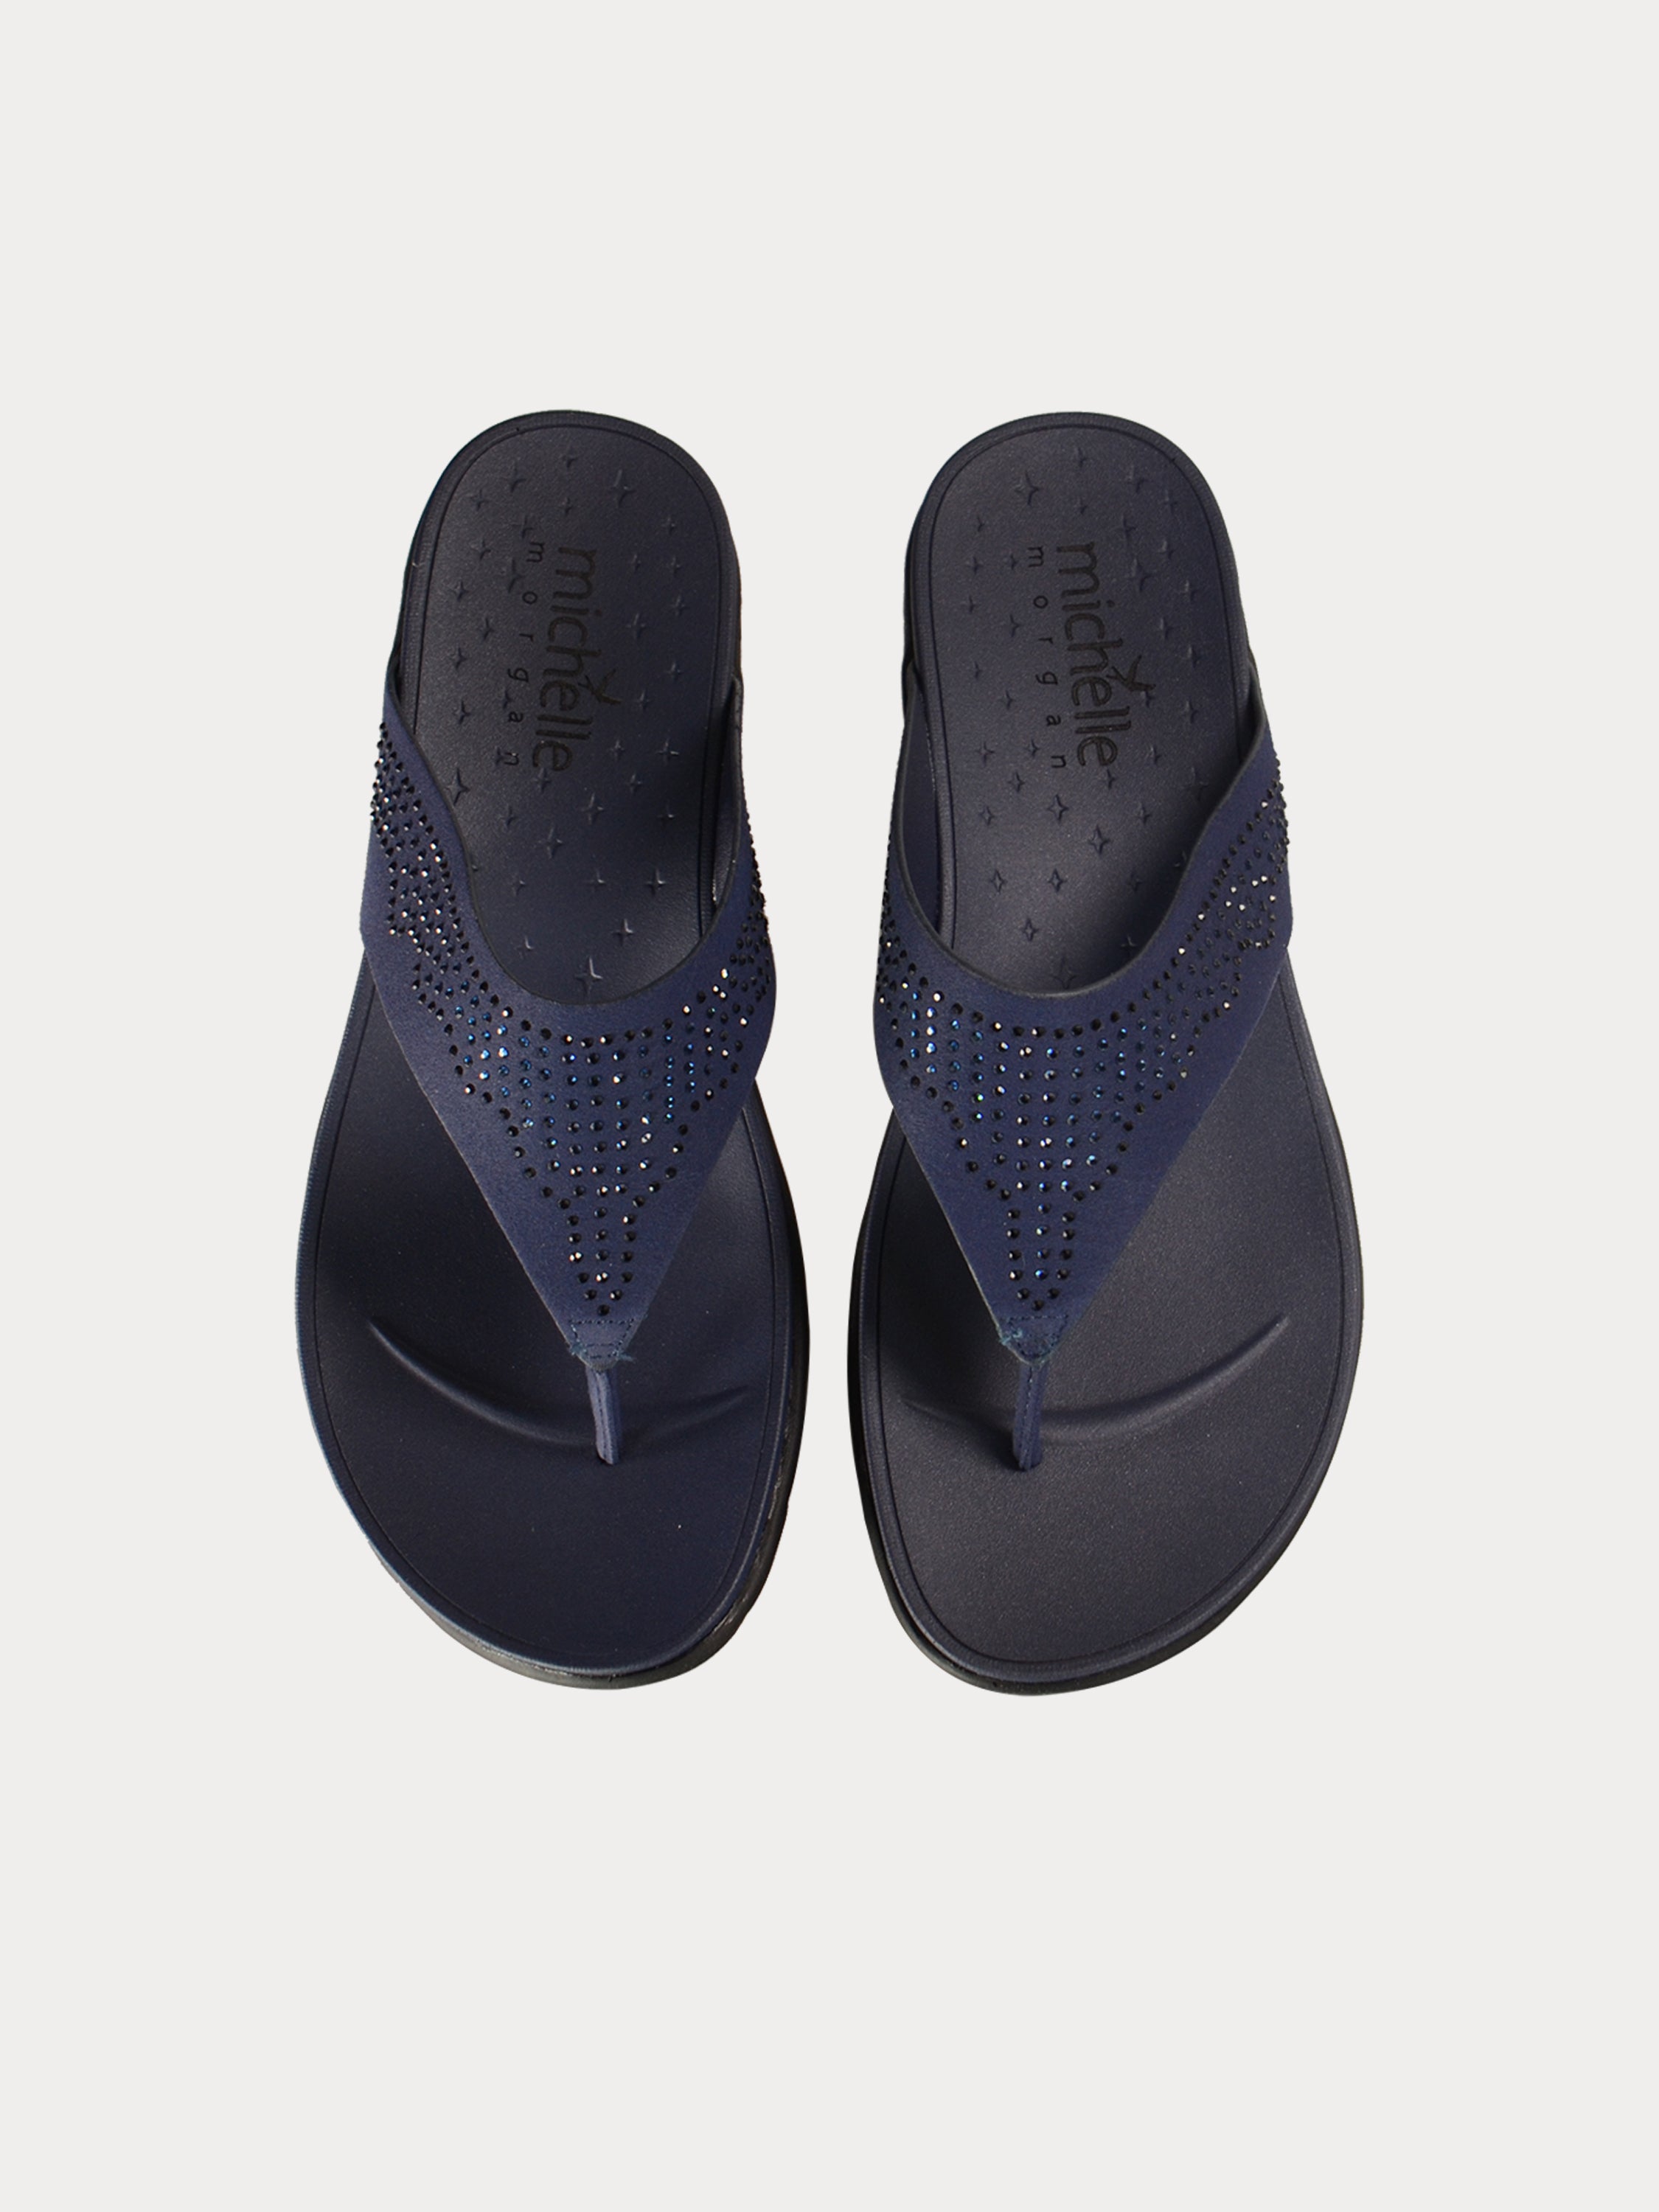 Michelle Morgan 814083 Women's Slip On Sandals #color_Navy